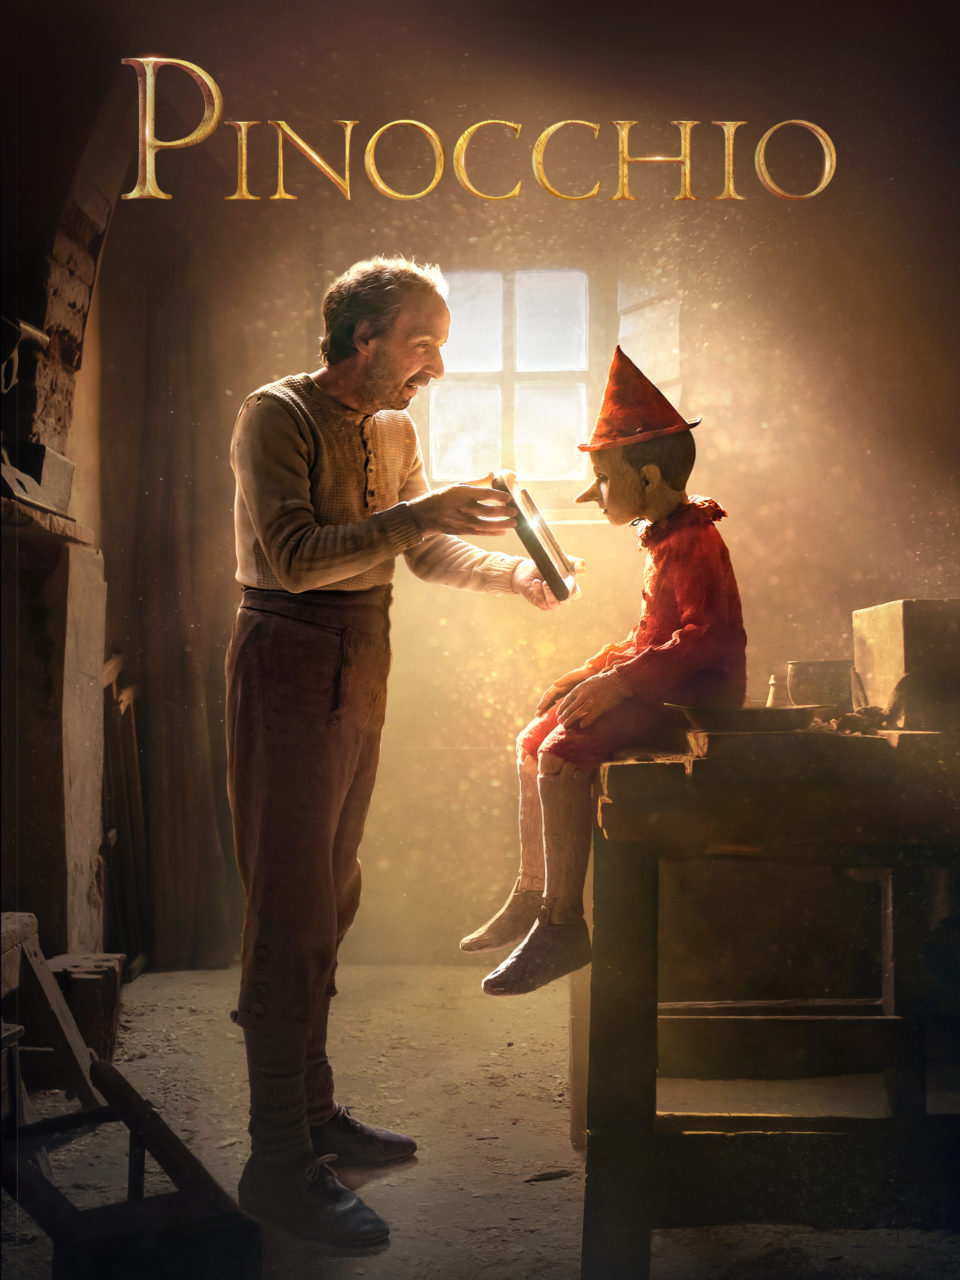 Pinocchio poster (Lionsgate)